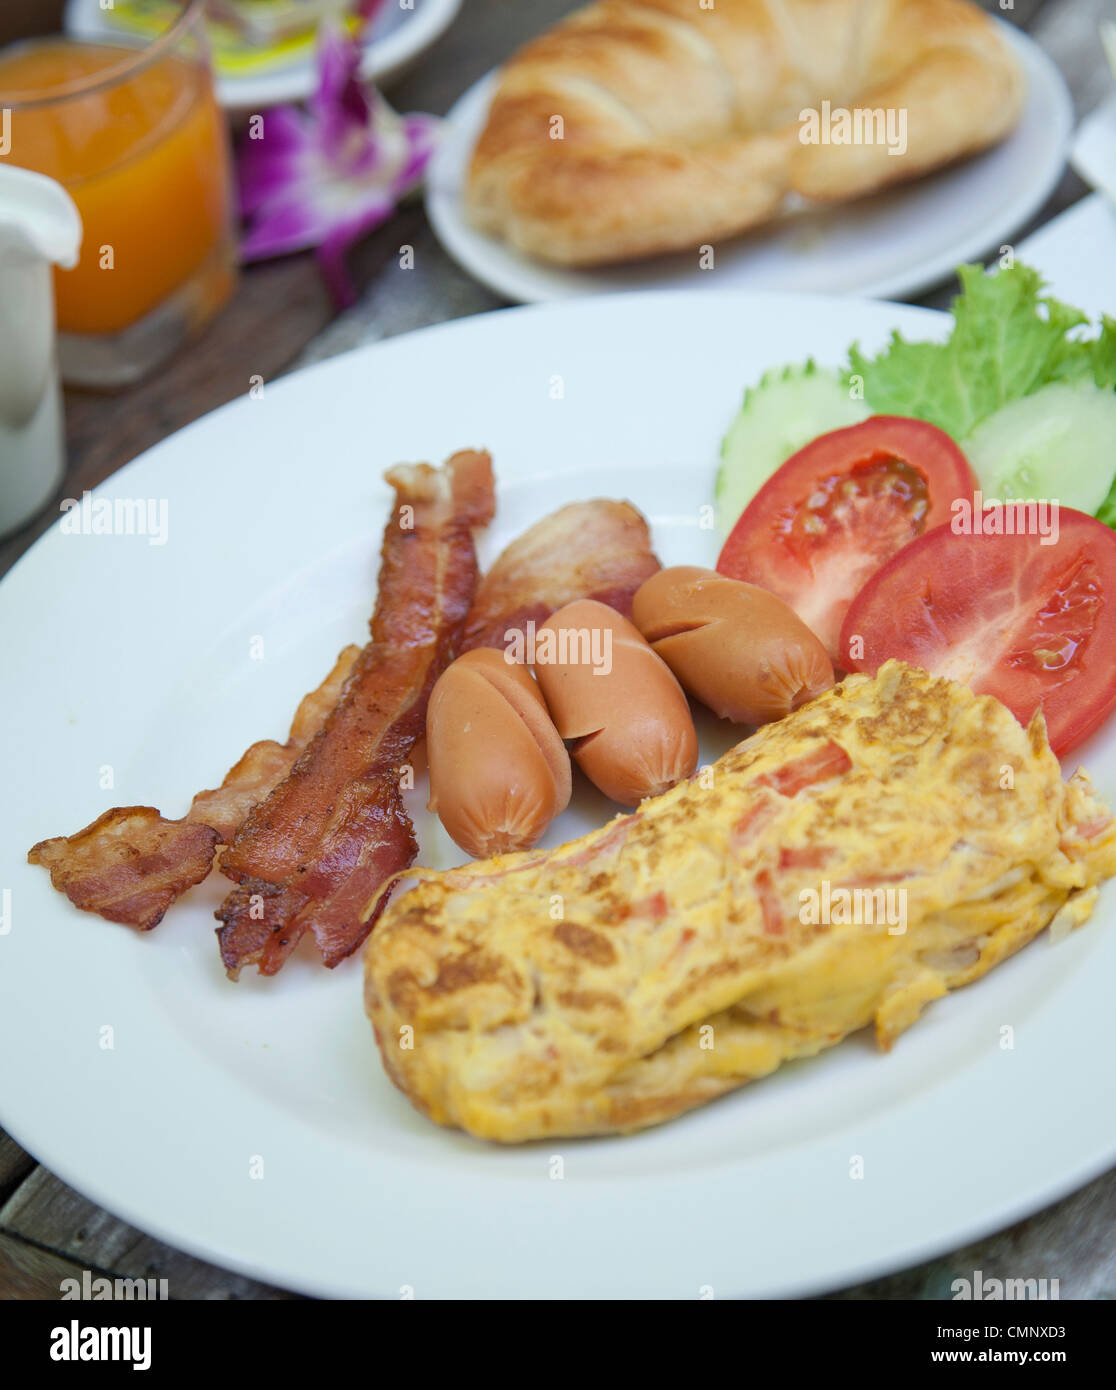 American breakfast, eggs, bacon, coffee Stock Photo